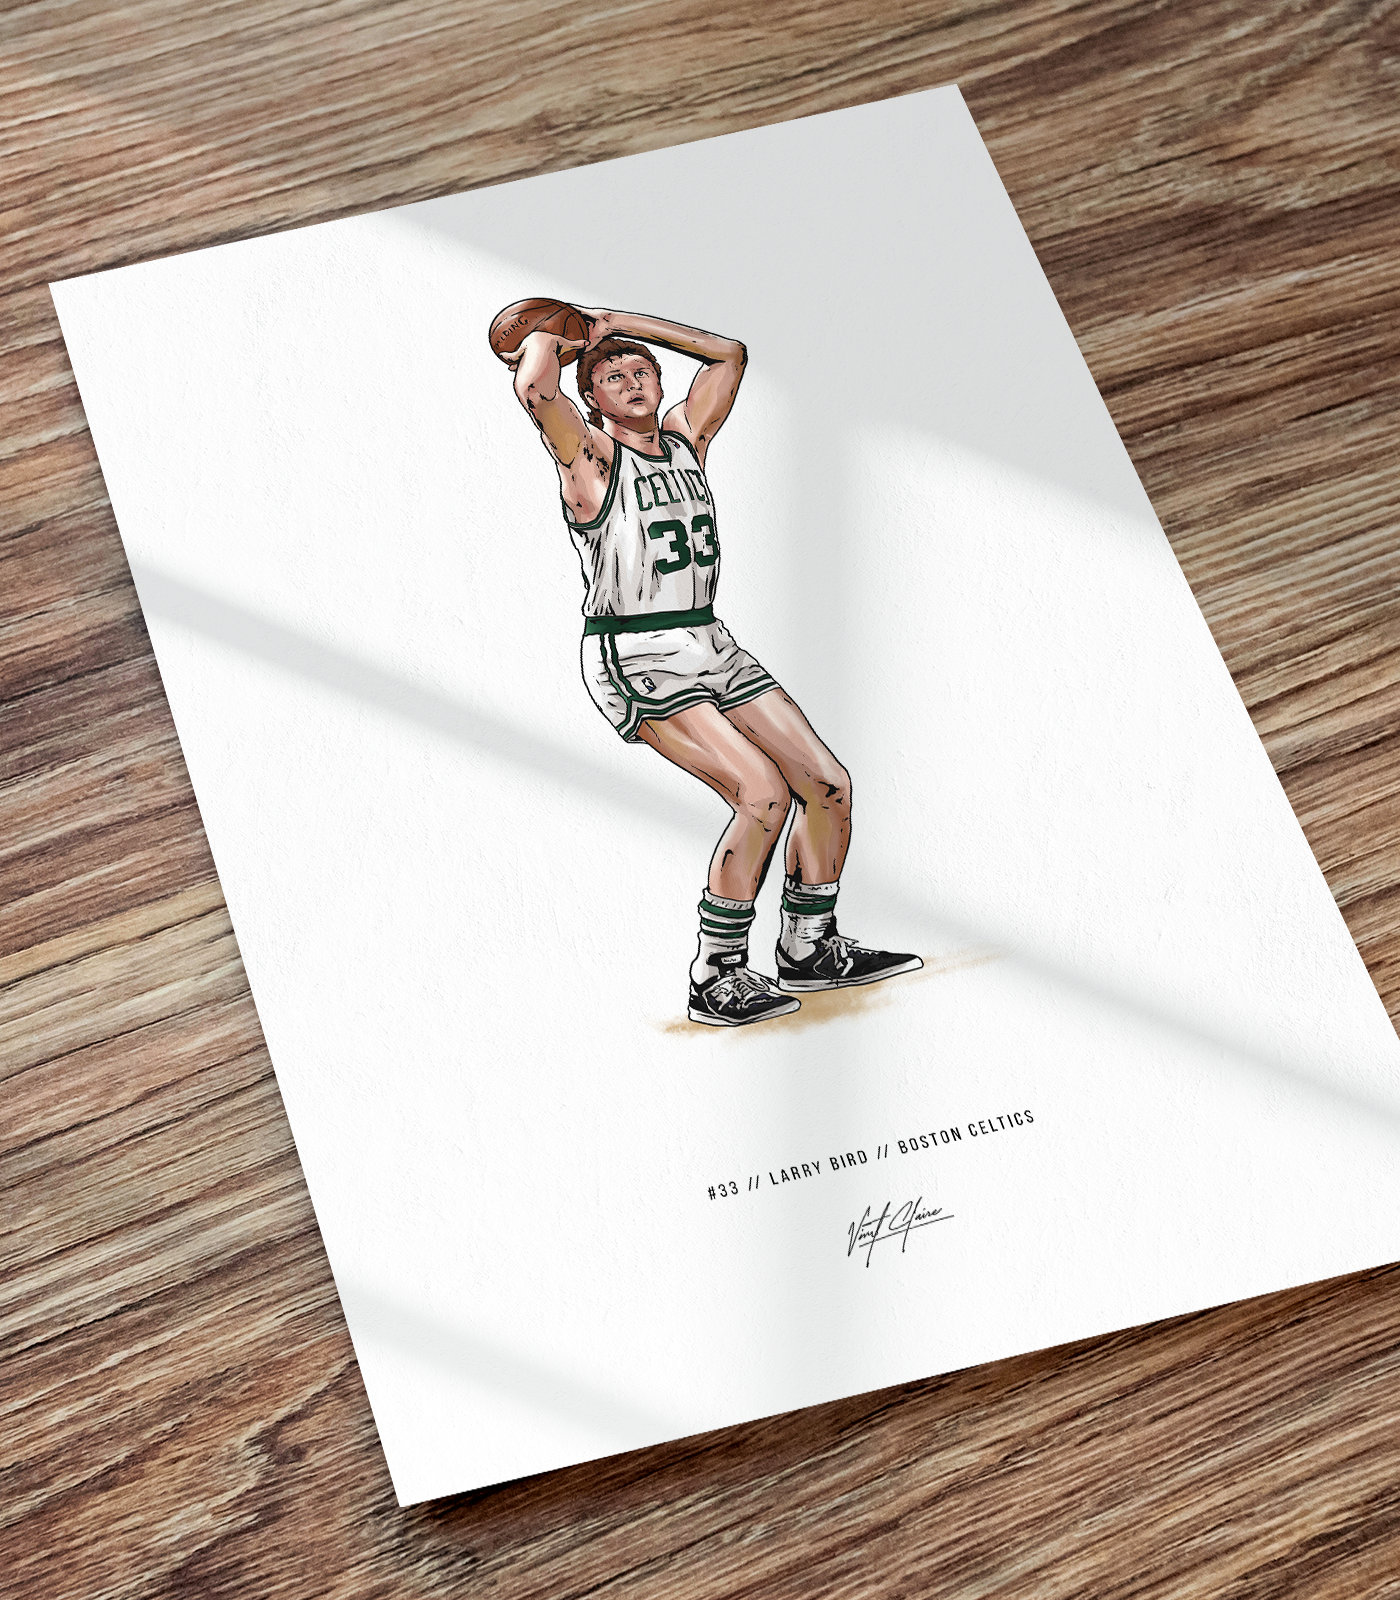  MW MERWEZI Larry Bird Jersey Art Boston Celtics NBA Wall Art  Home Decor Hand Made Poster Canvas Print(Black Floating Frame, 20x30):  Posters & Prints